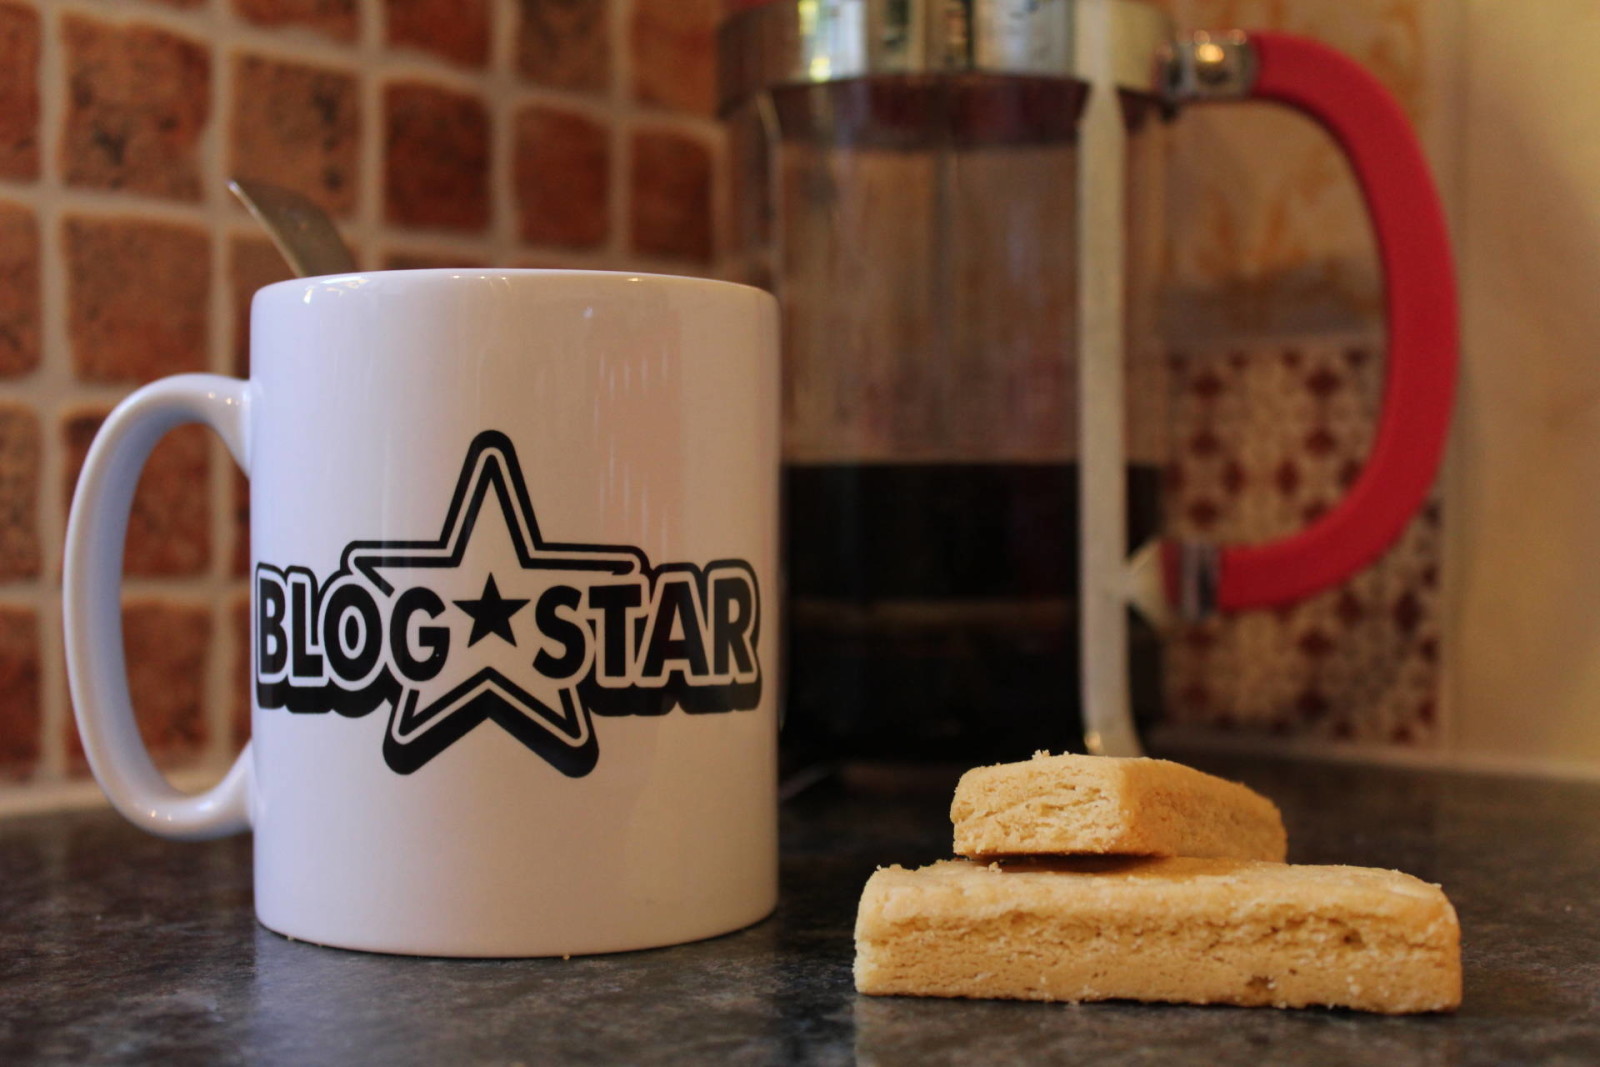 blog star mugs from Charlie Moo's